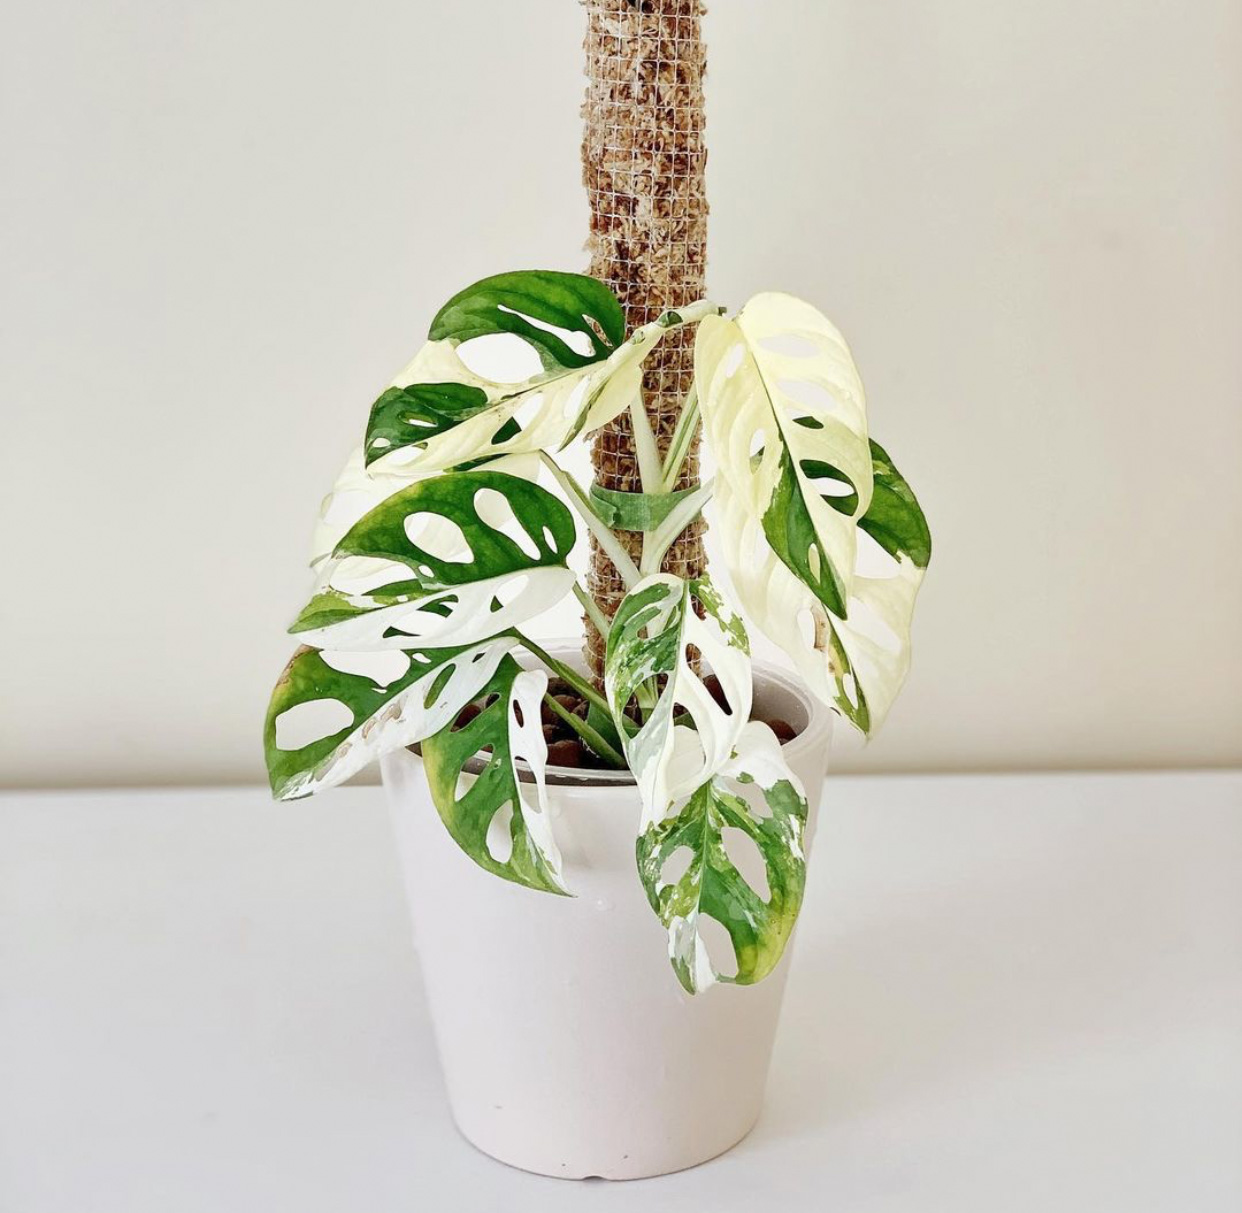 Adansonii Plant Care Tips - The Jungle Collective